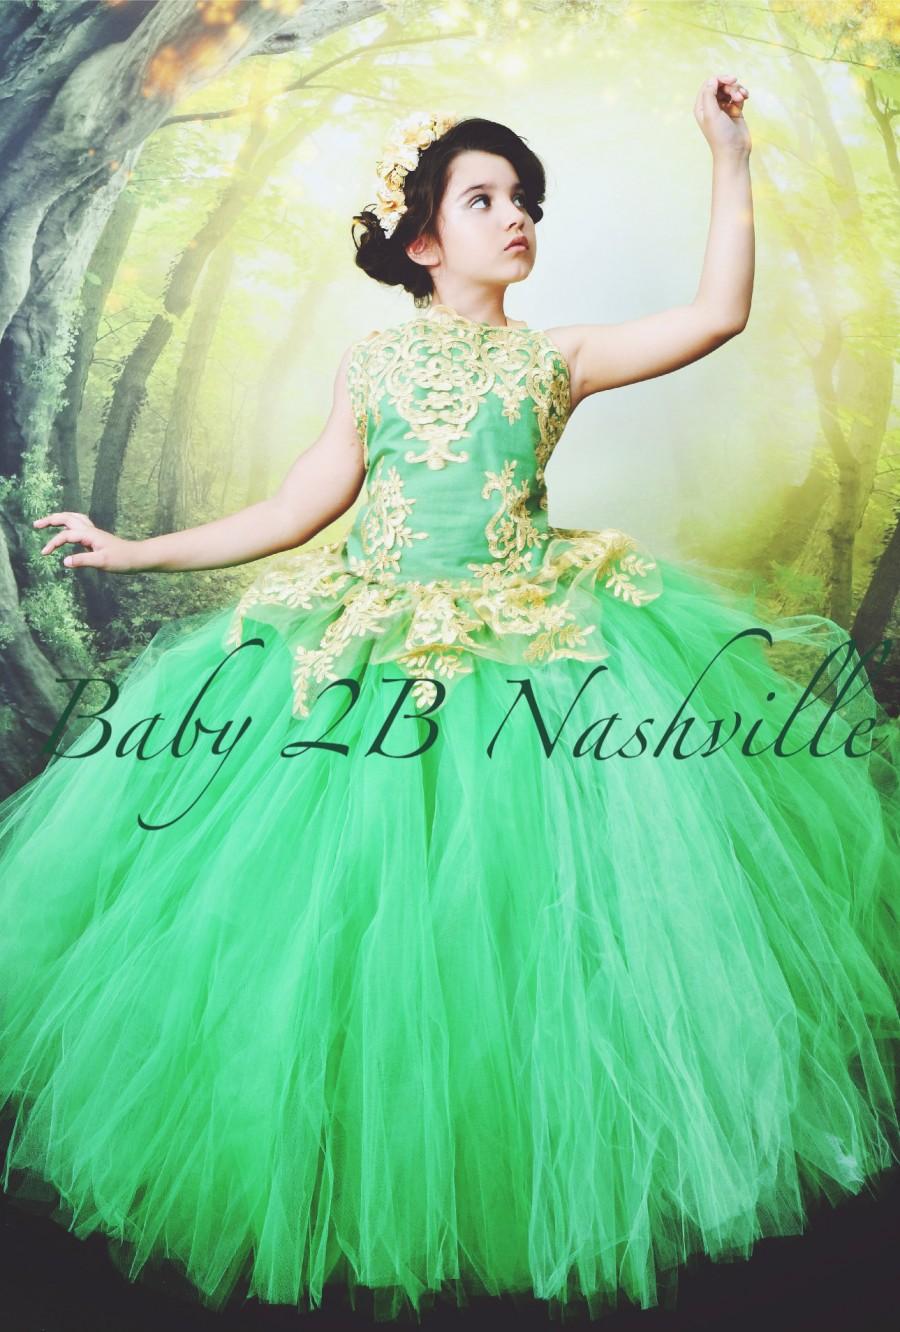 زفاف - Emerald Green Dress Gold Dress Flower Girl Dress Princess Dress Tulle Dress Lace Dress Wedding Dress Birthday Dress Tutu Dress Girls Dress